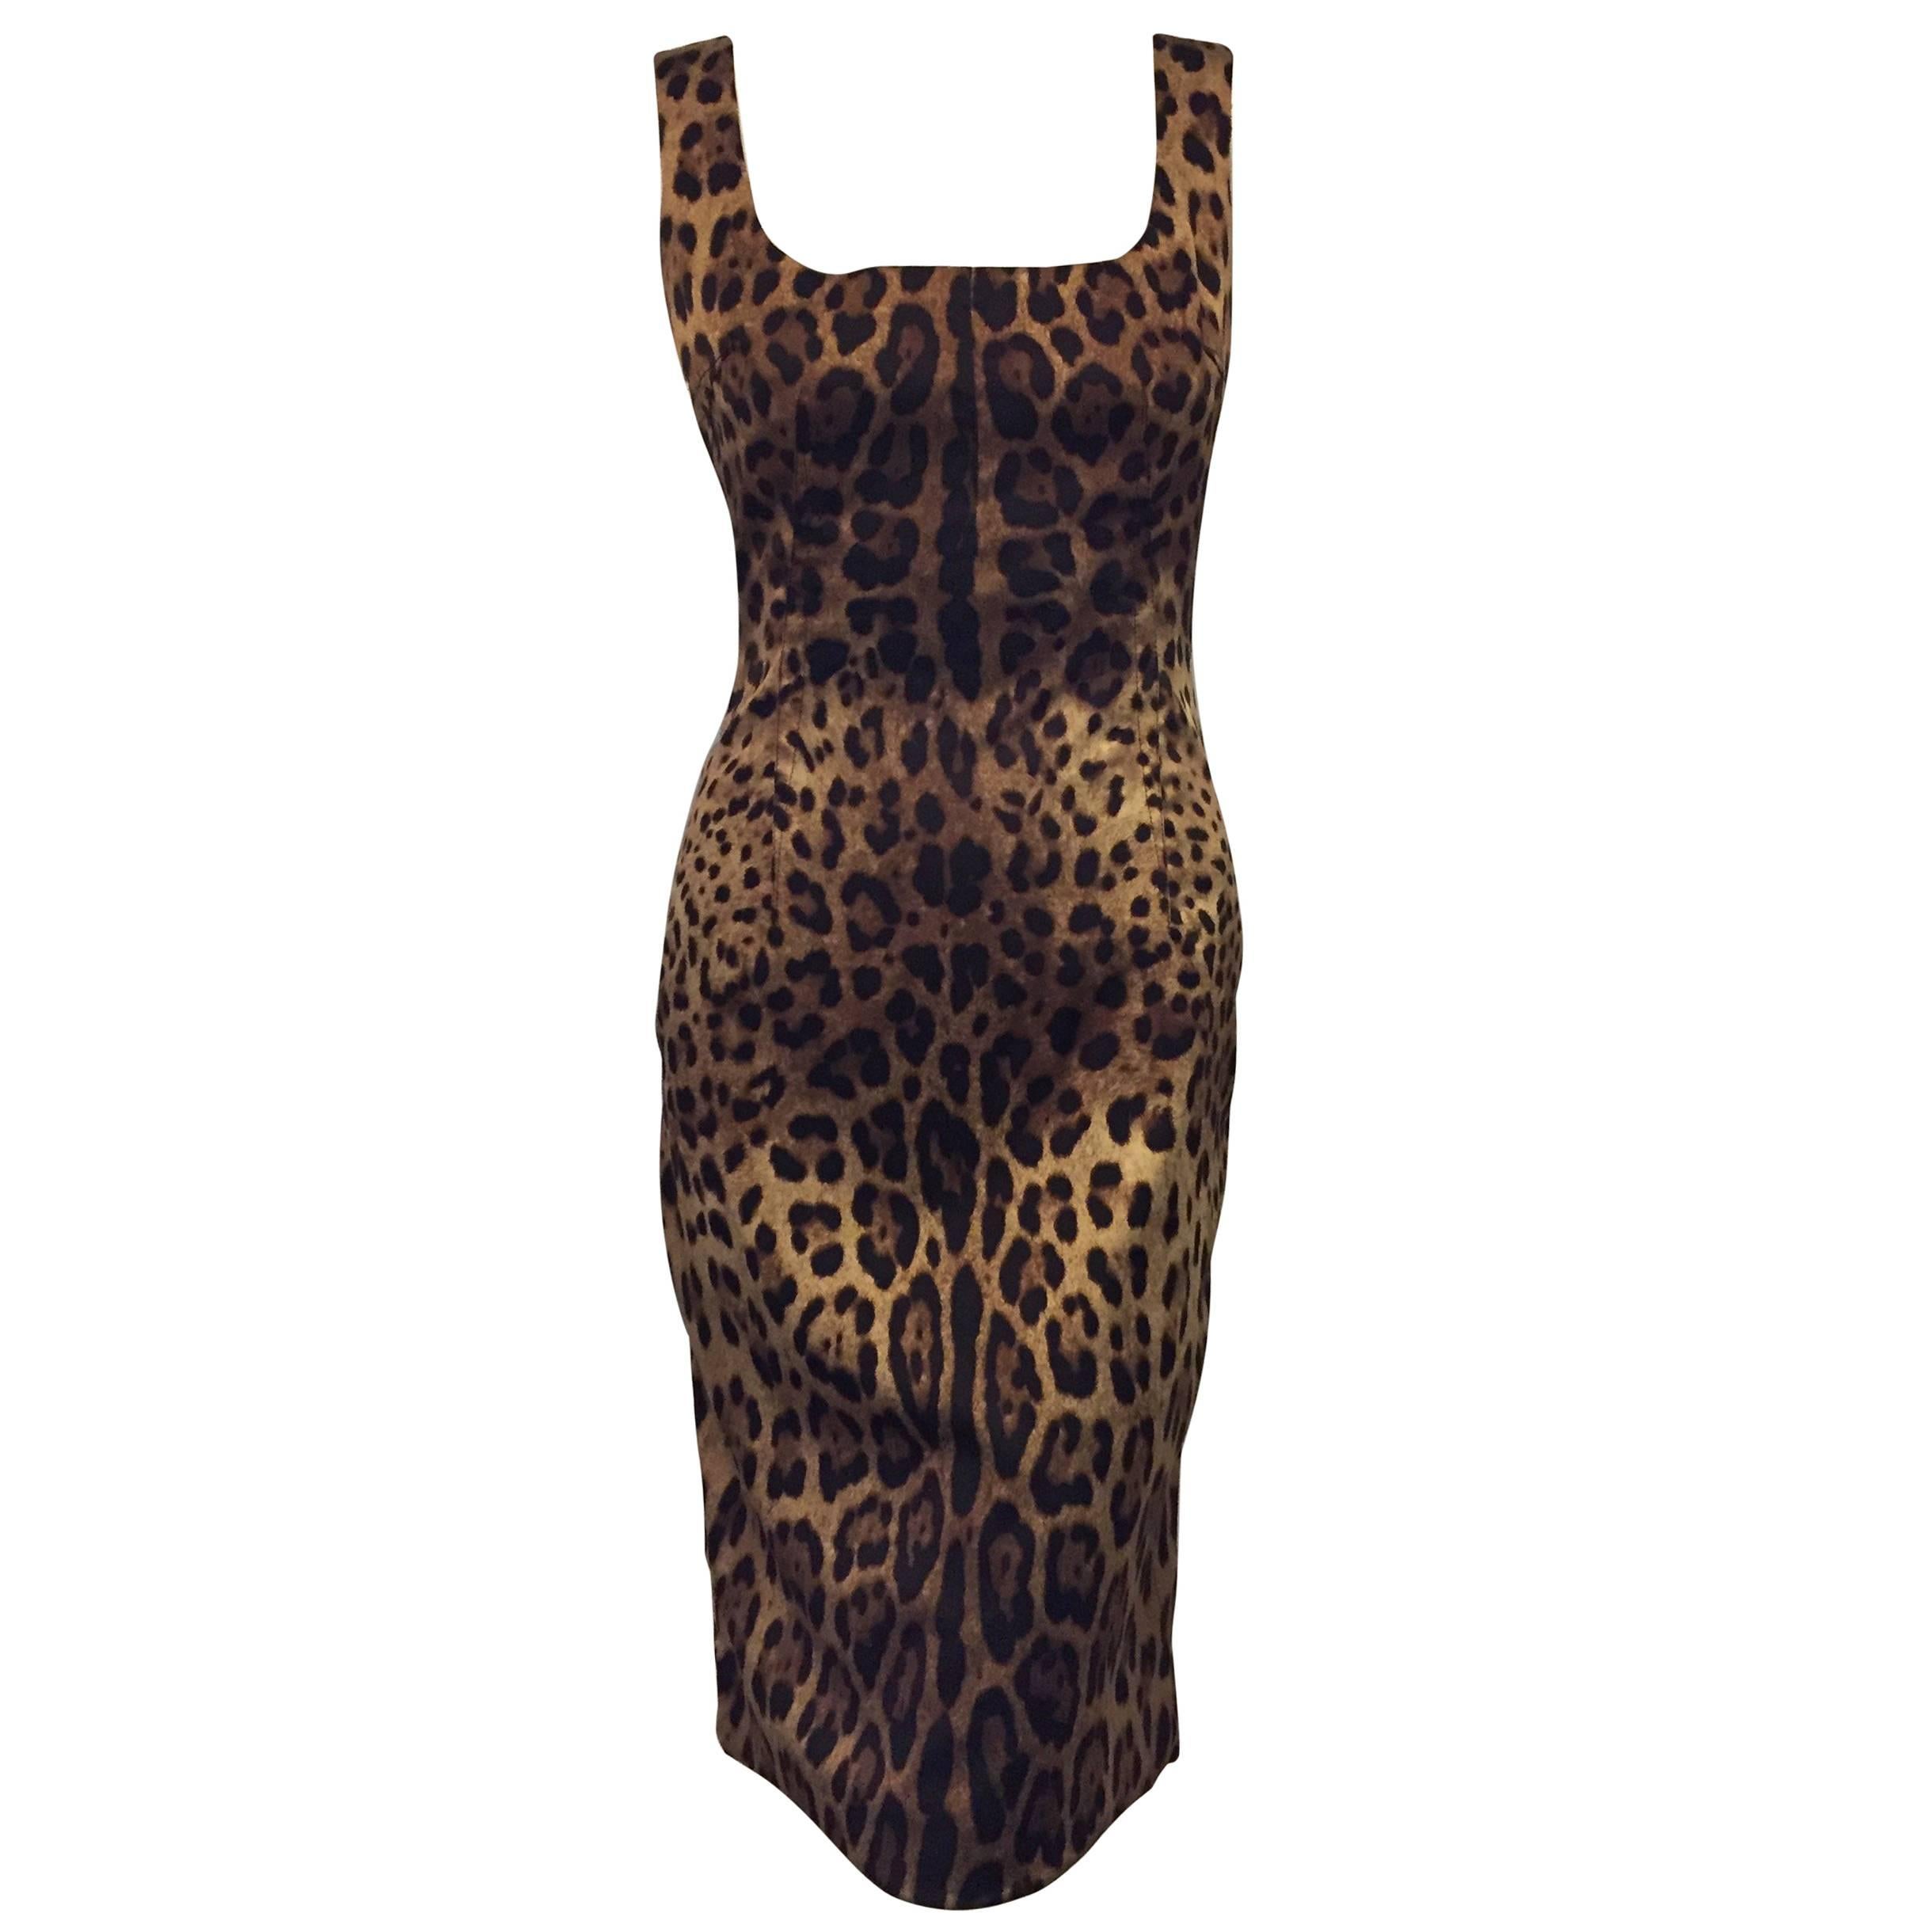 Daring Dolce & Gabbana Leopard Print Sheath Dress